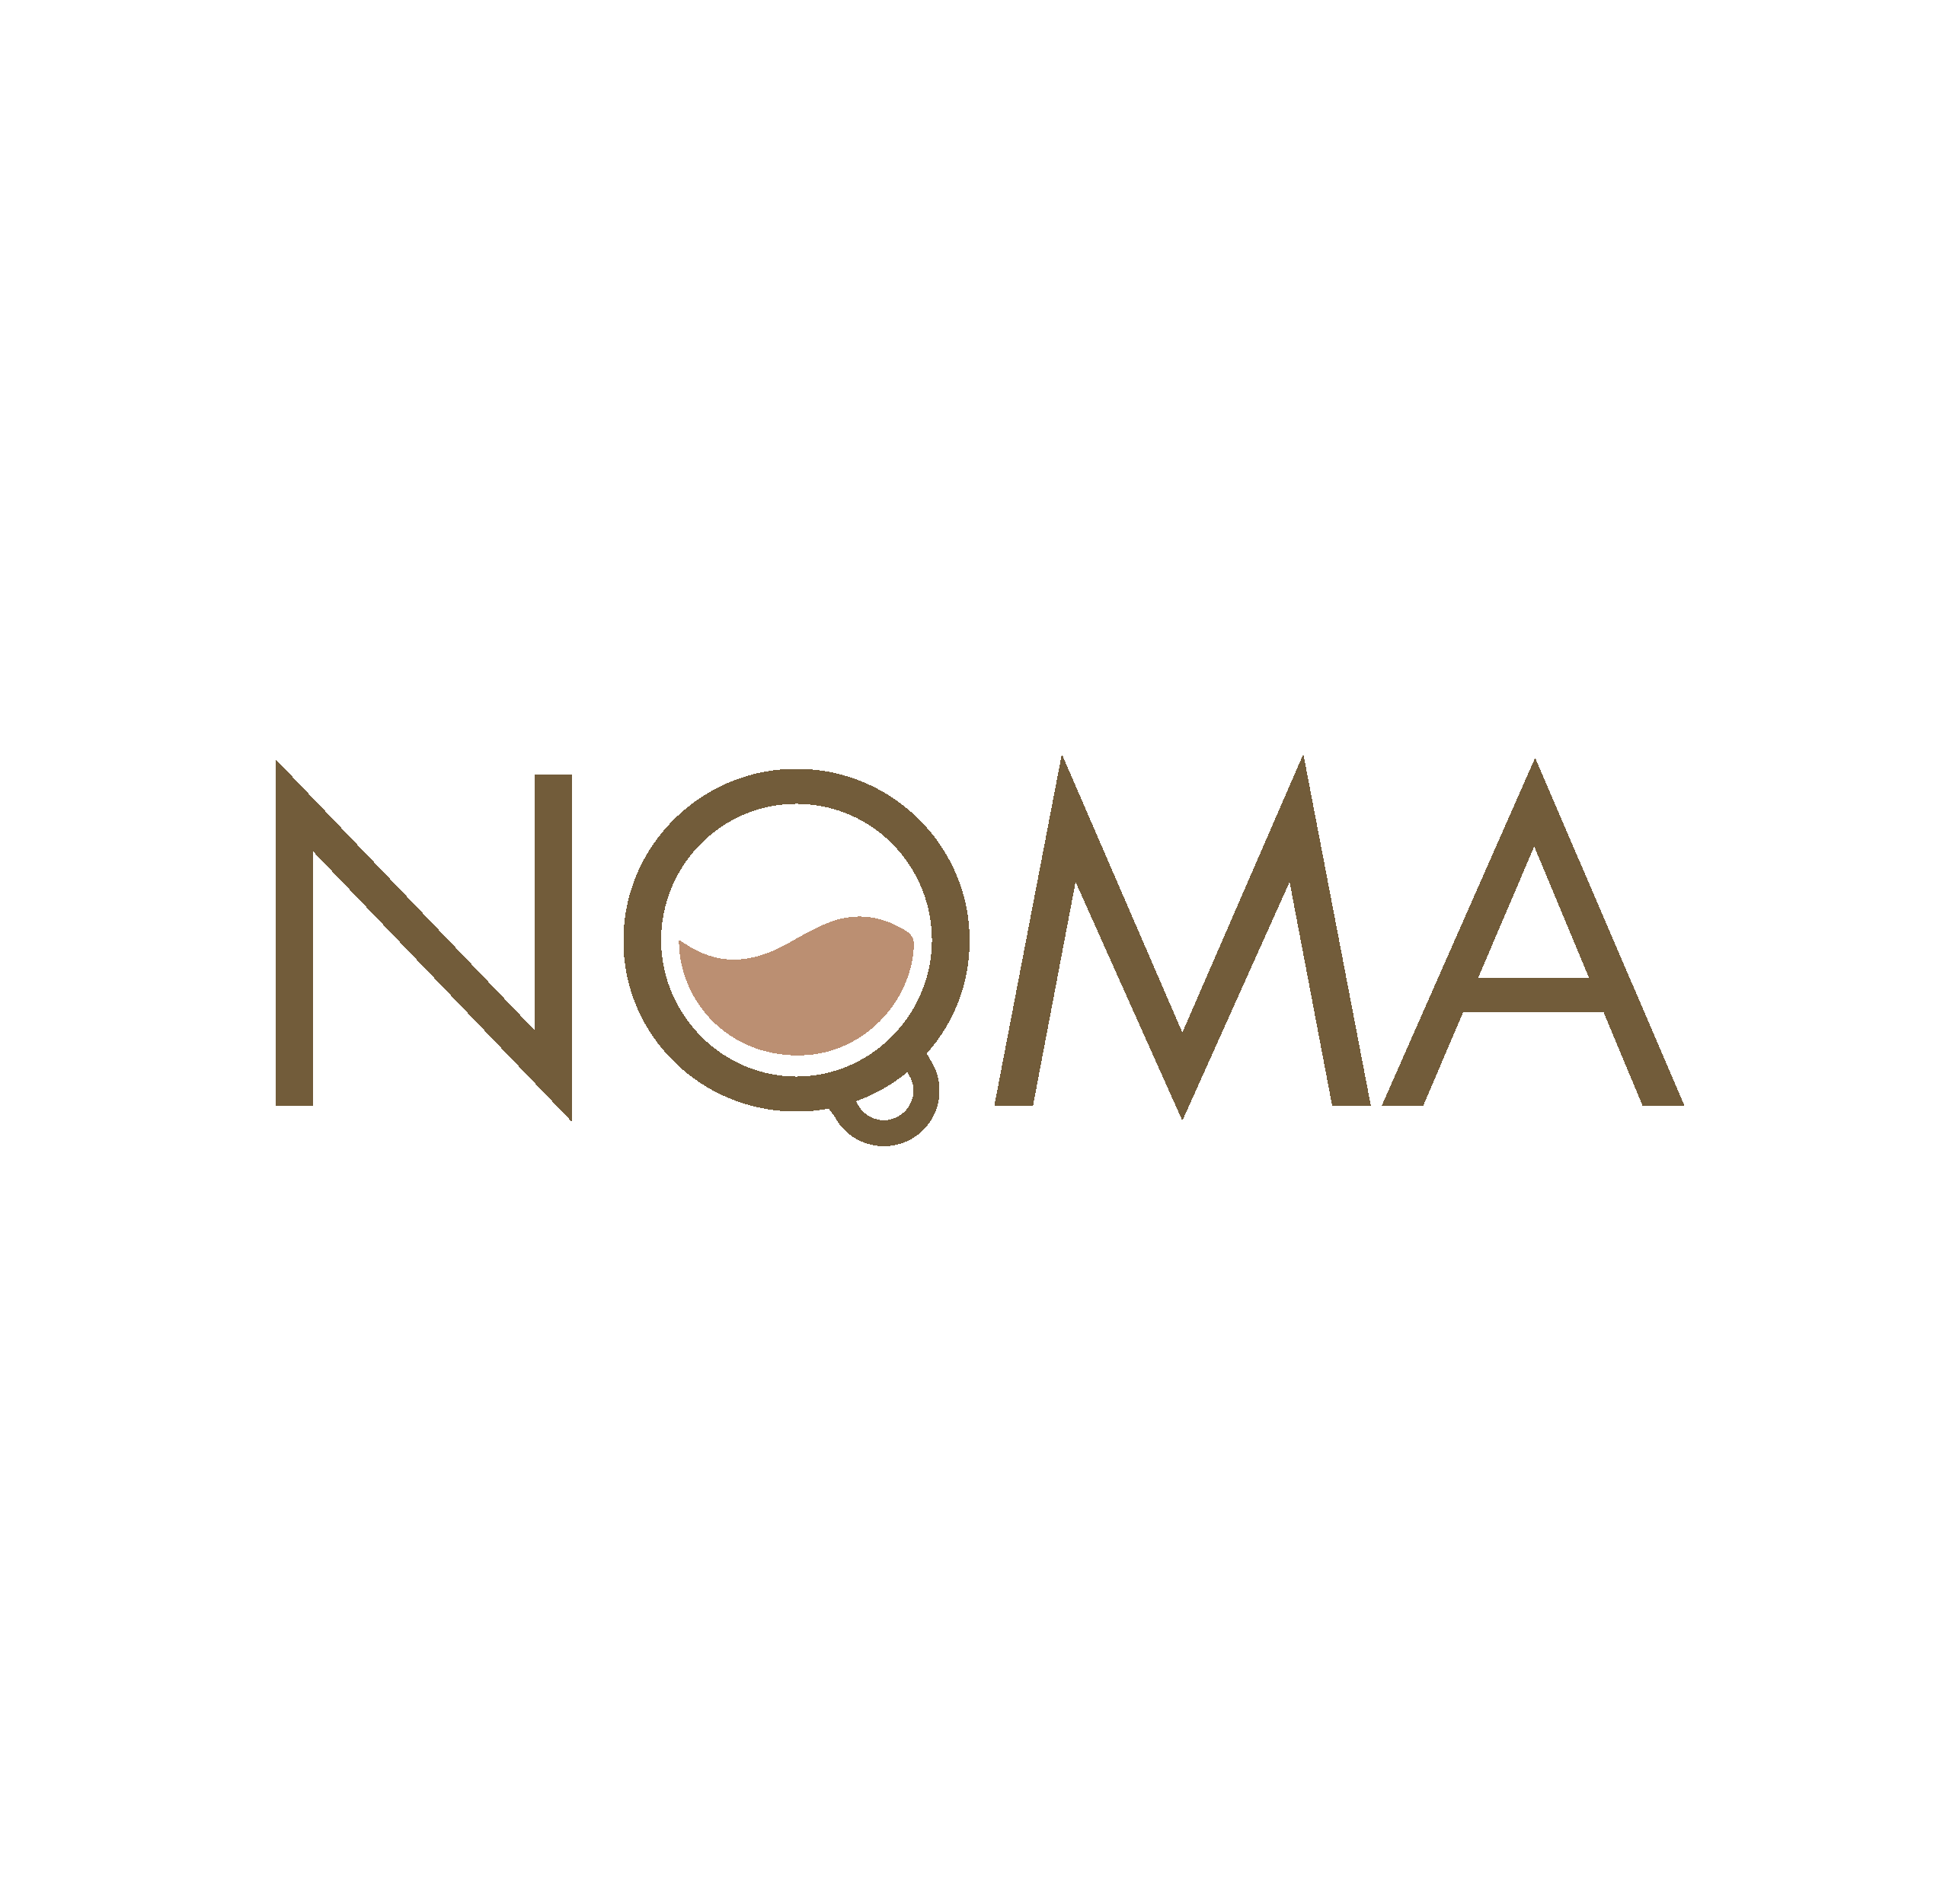 Noma coffee